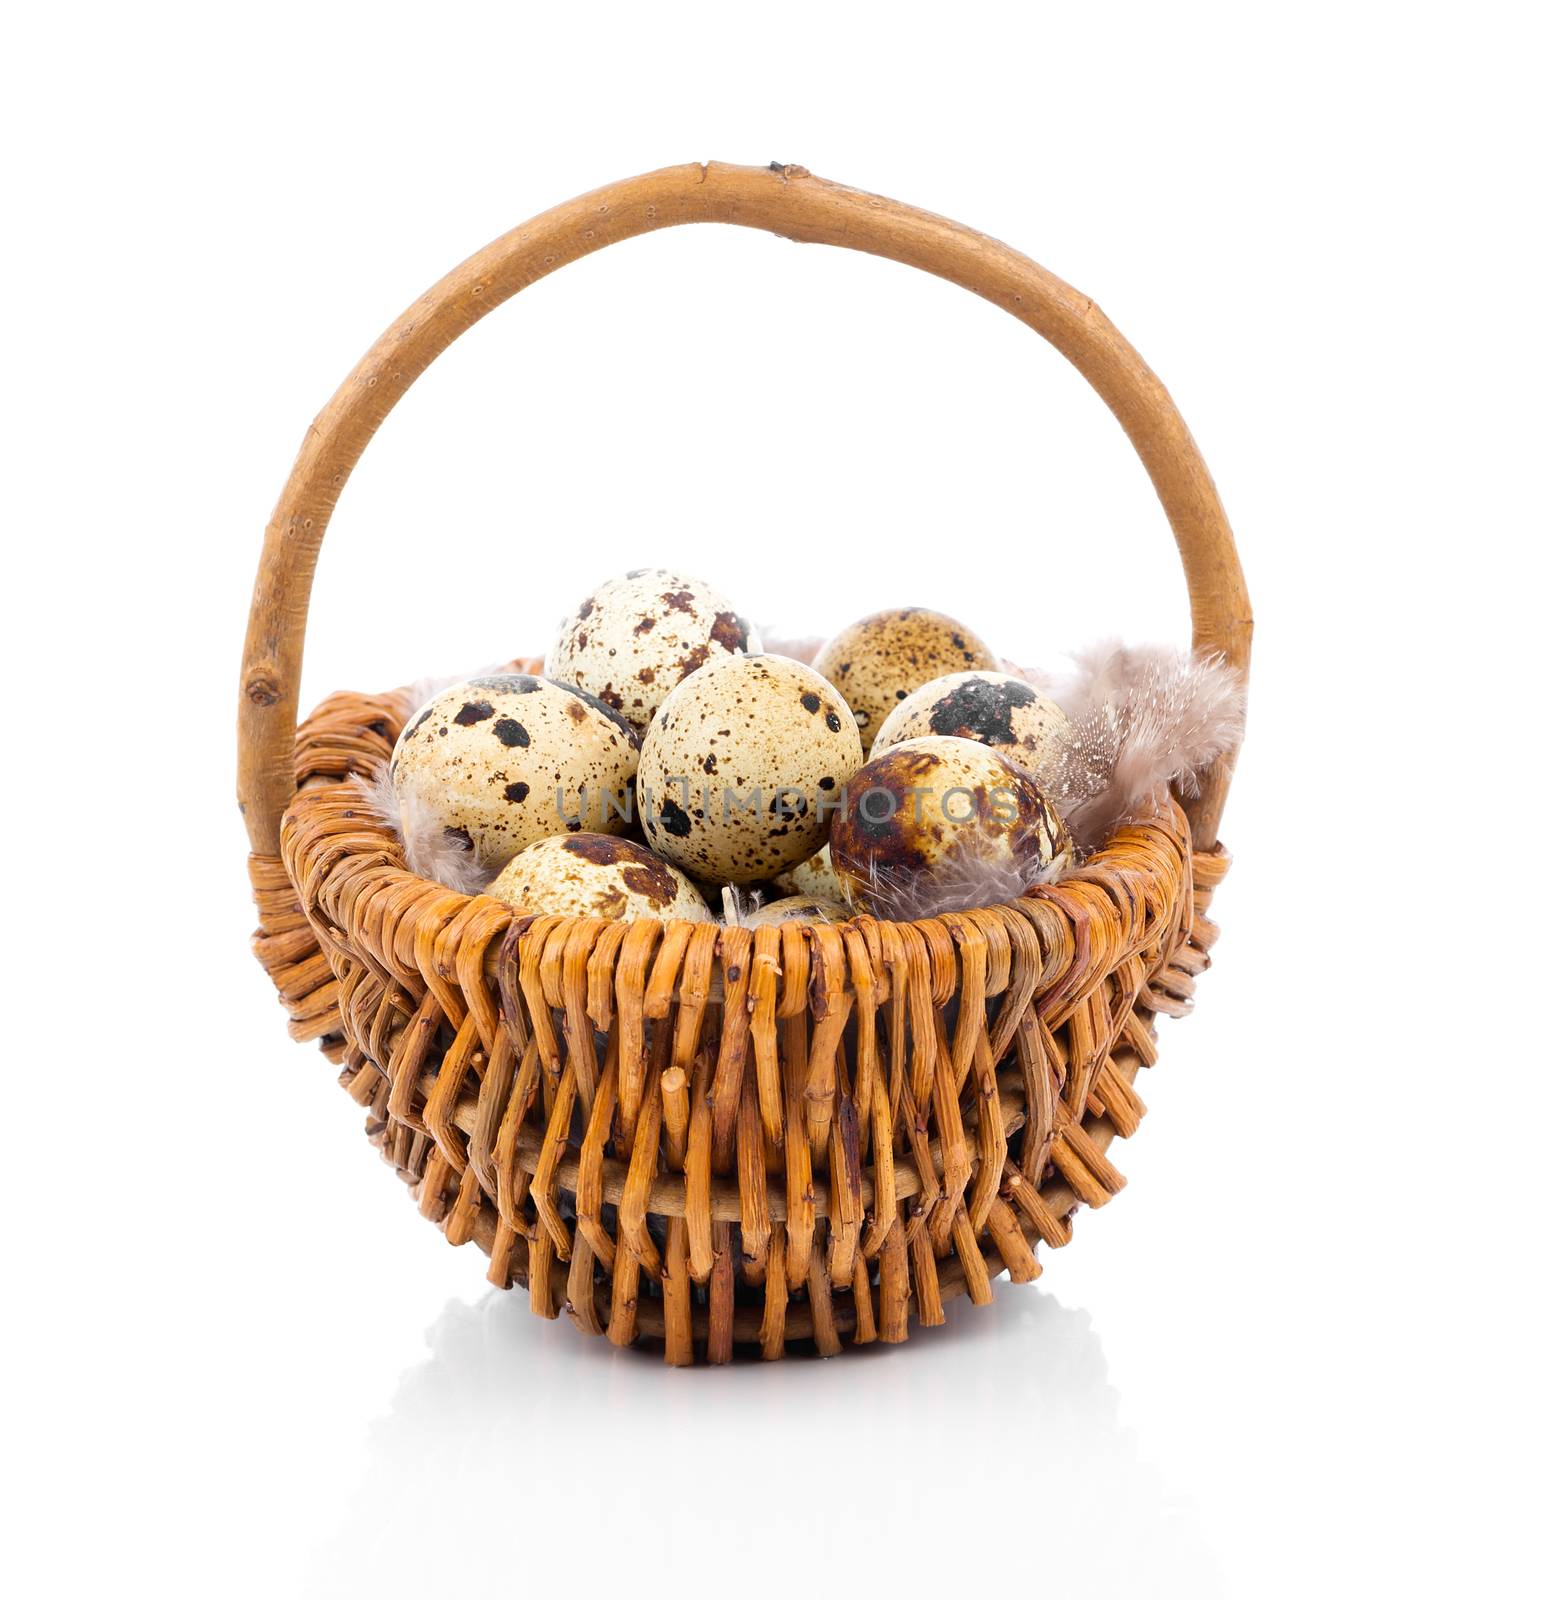 quail eggs in basket, on white background